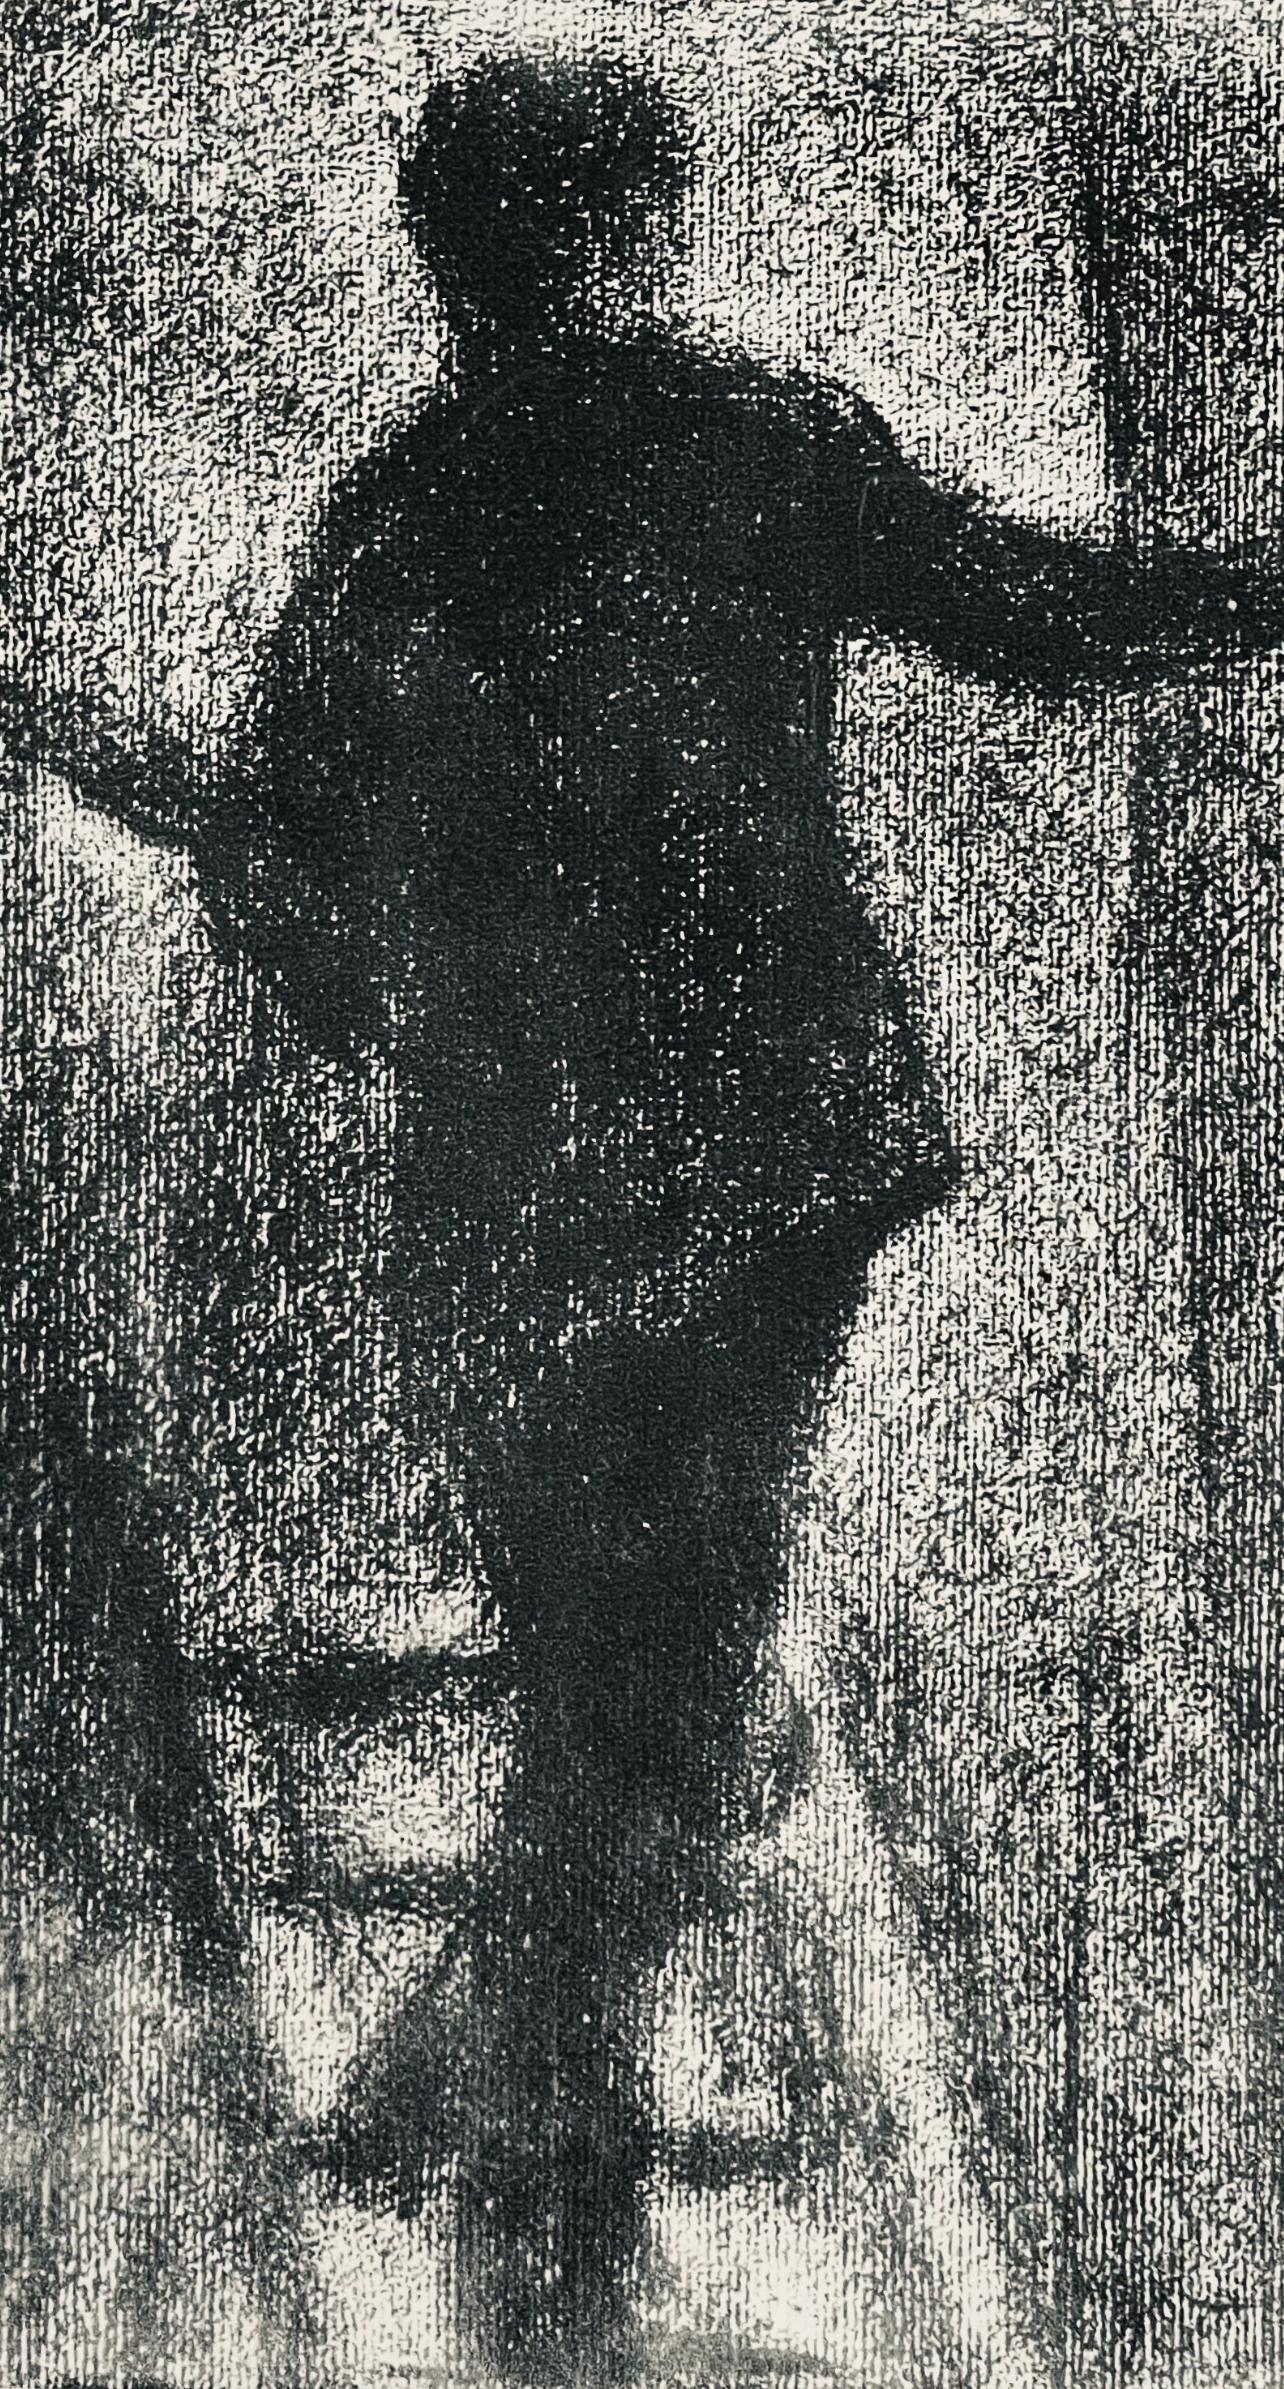 Seurat, Le peintre au travail, Seurat (nach) – Print von Georges Seurat